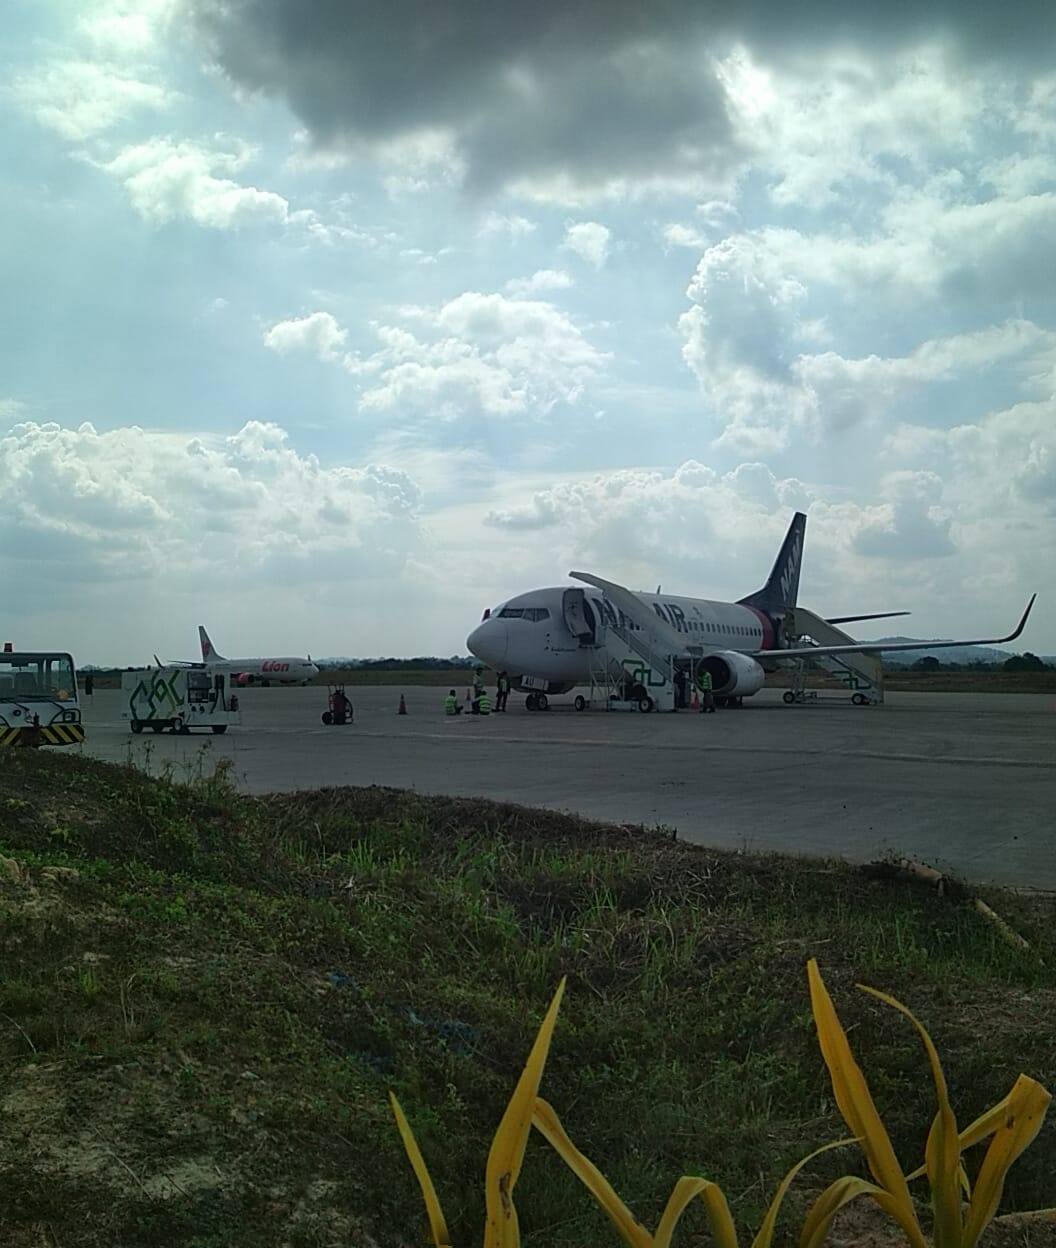 Bandara APT Pranoto Dikabarkan Tutup 20 Hari, Dishub Kaltim dan Maskapai Belum Membenarkan